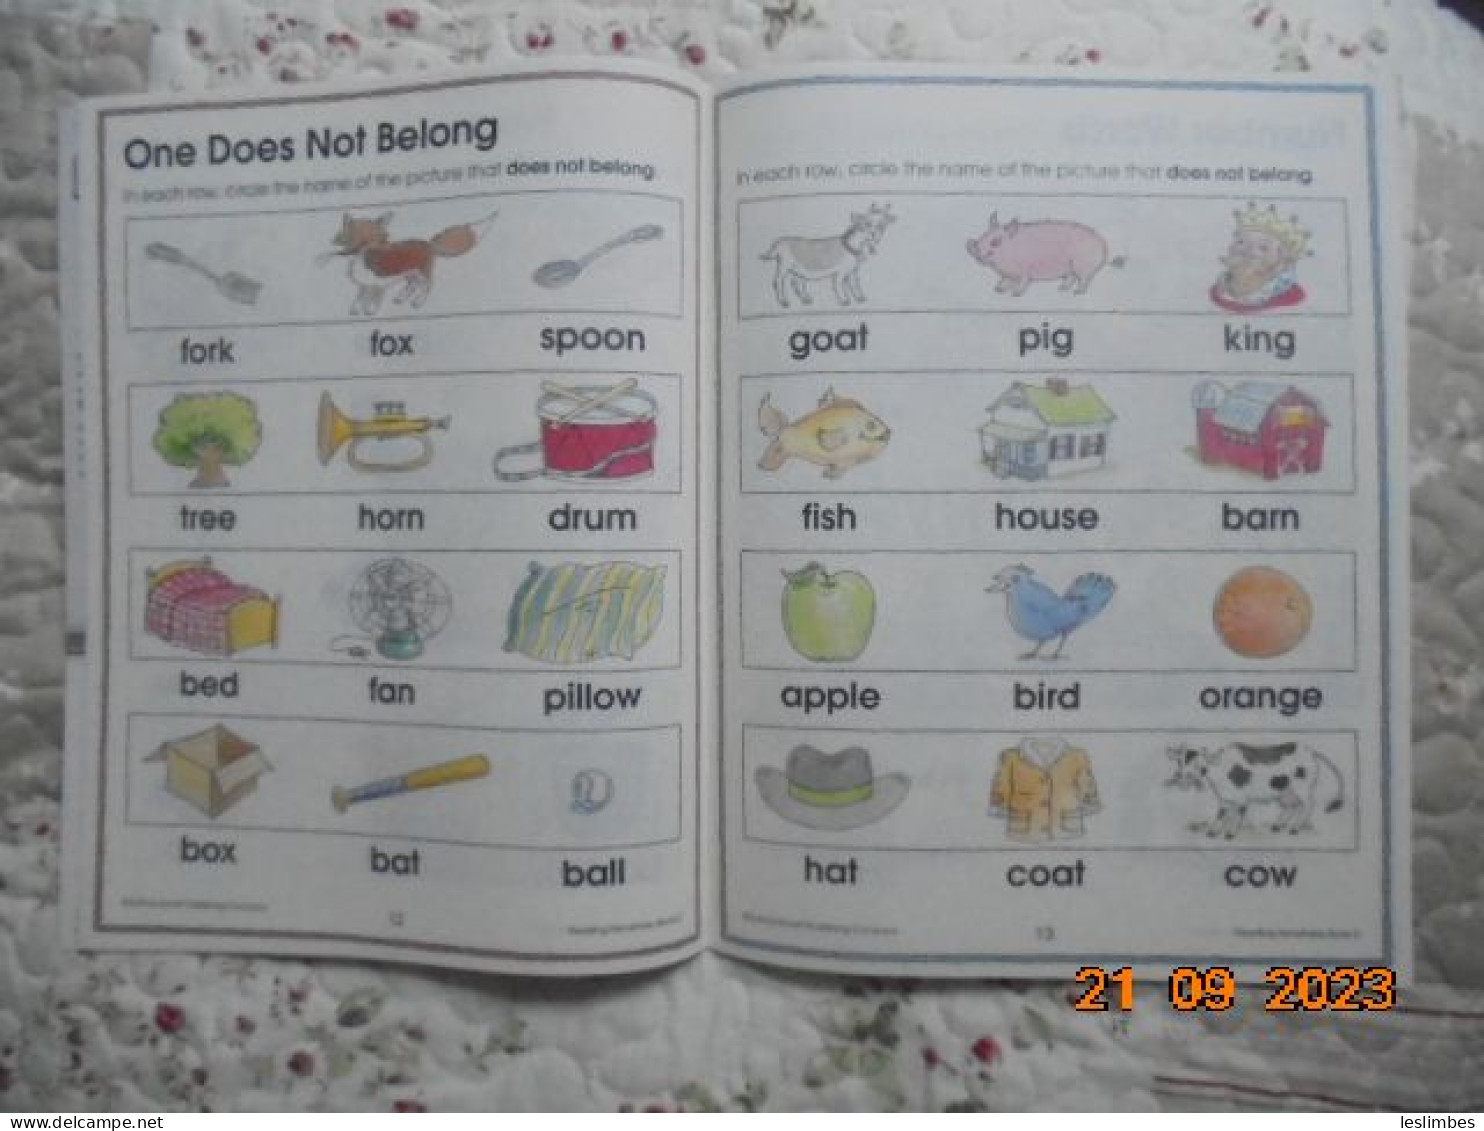 2015 School Zone "I Know It!" Reading Readiness Grades K-1 (ages 5-7) Book 2 - Englische Grammatik